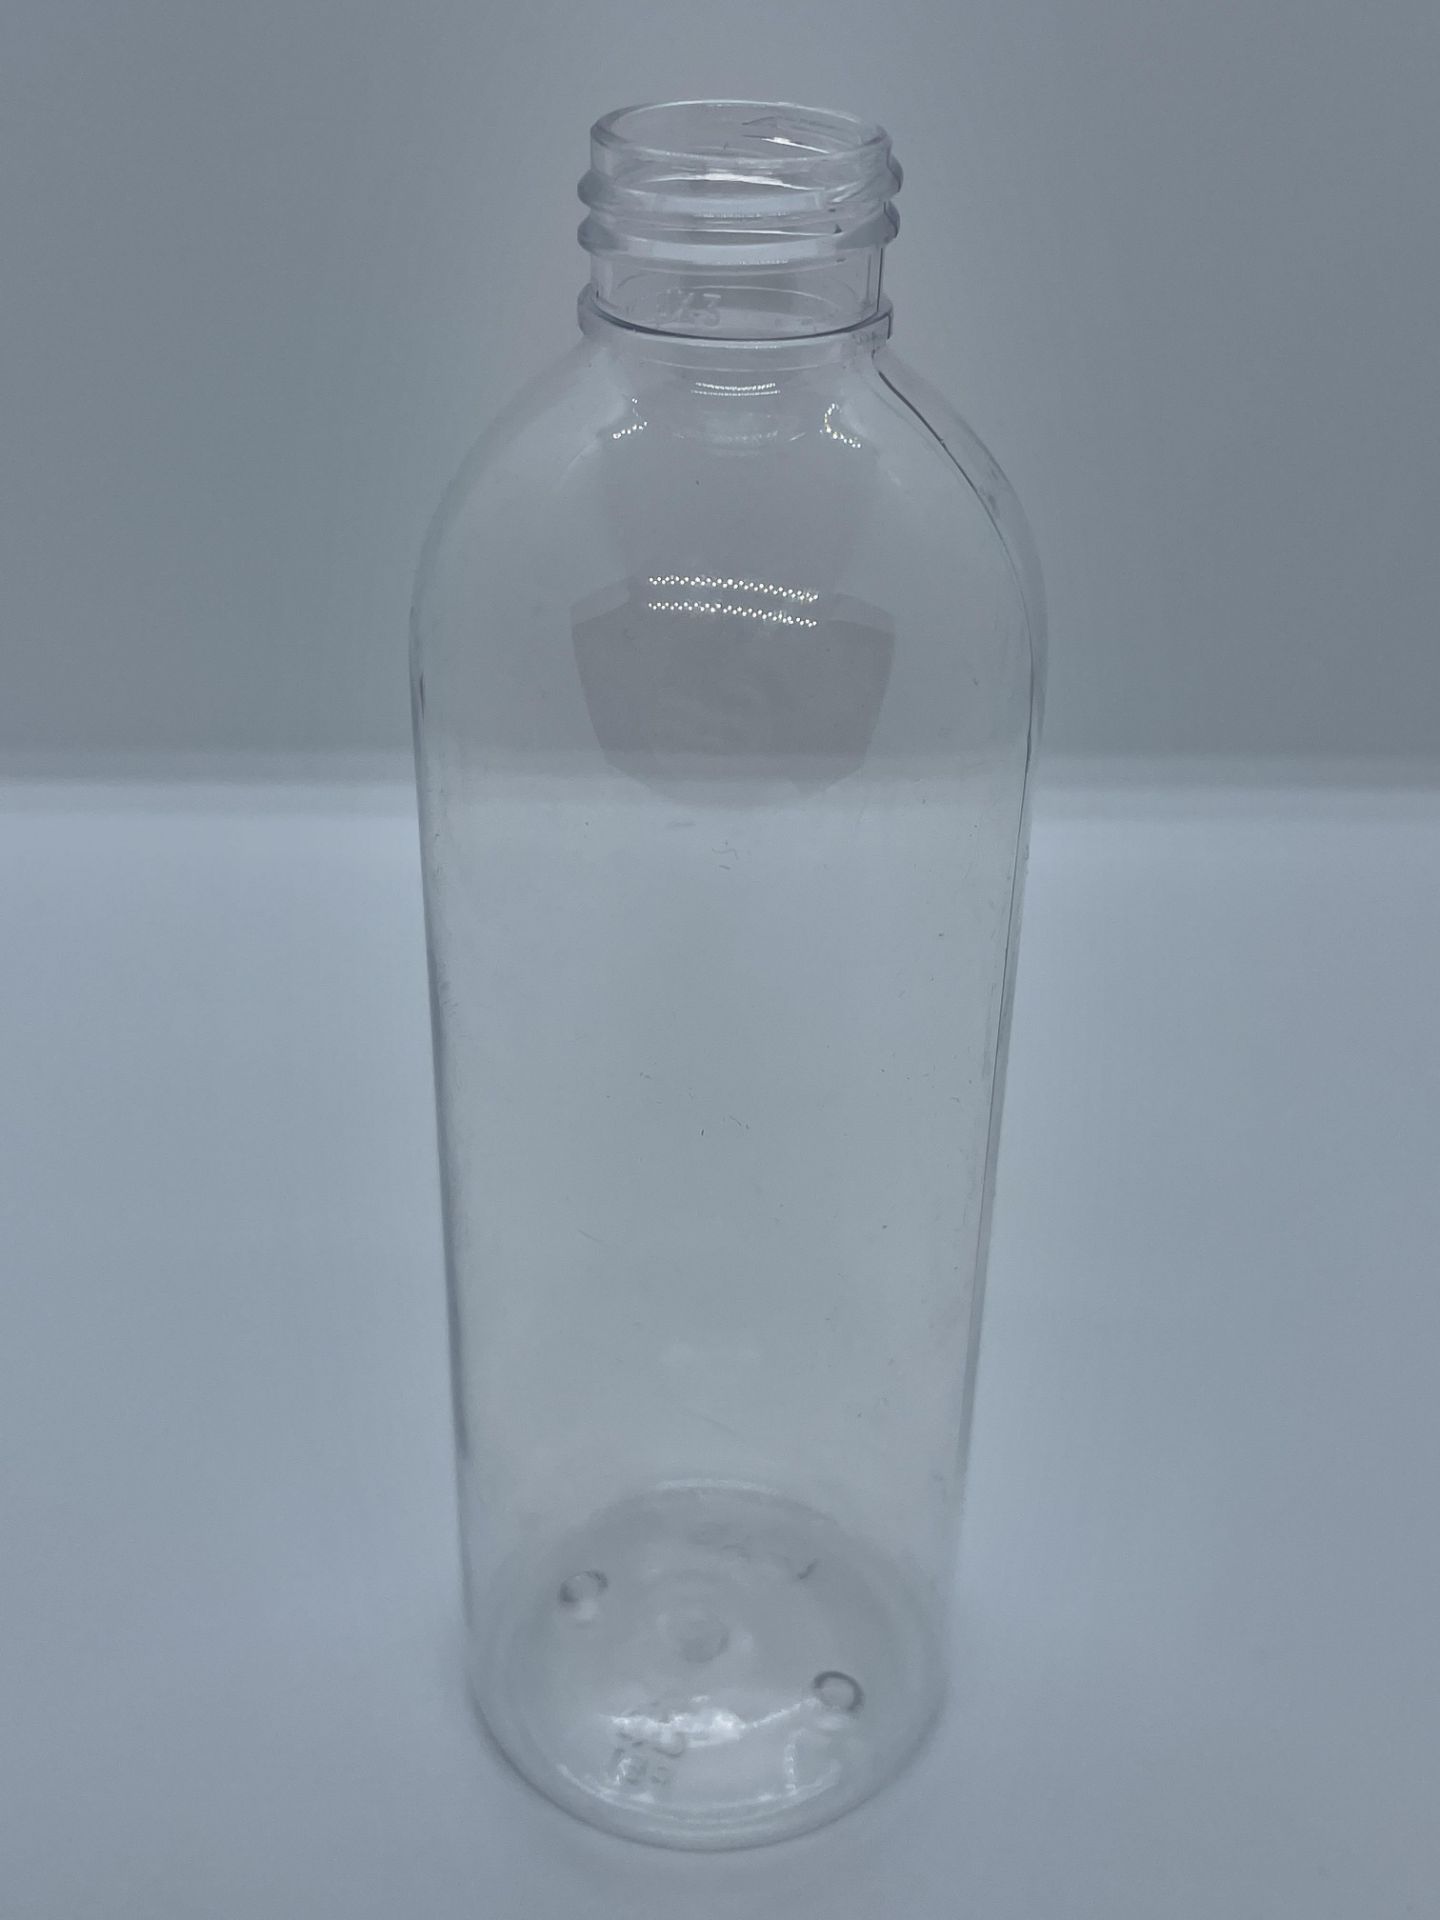 75,000 - Clear Plastic Bullet 8 oz Empty Bottles, 24-410 Threading Neck, 6.25" Tall, 2" Diameter - Image 4 of 10